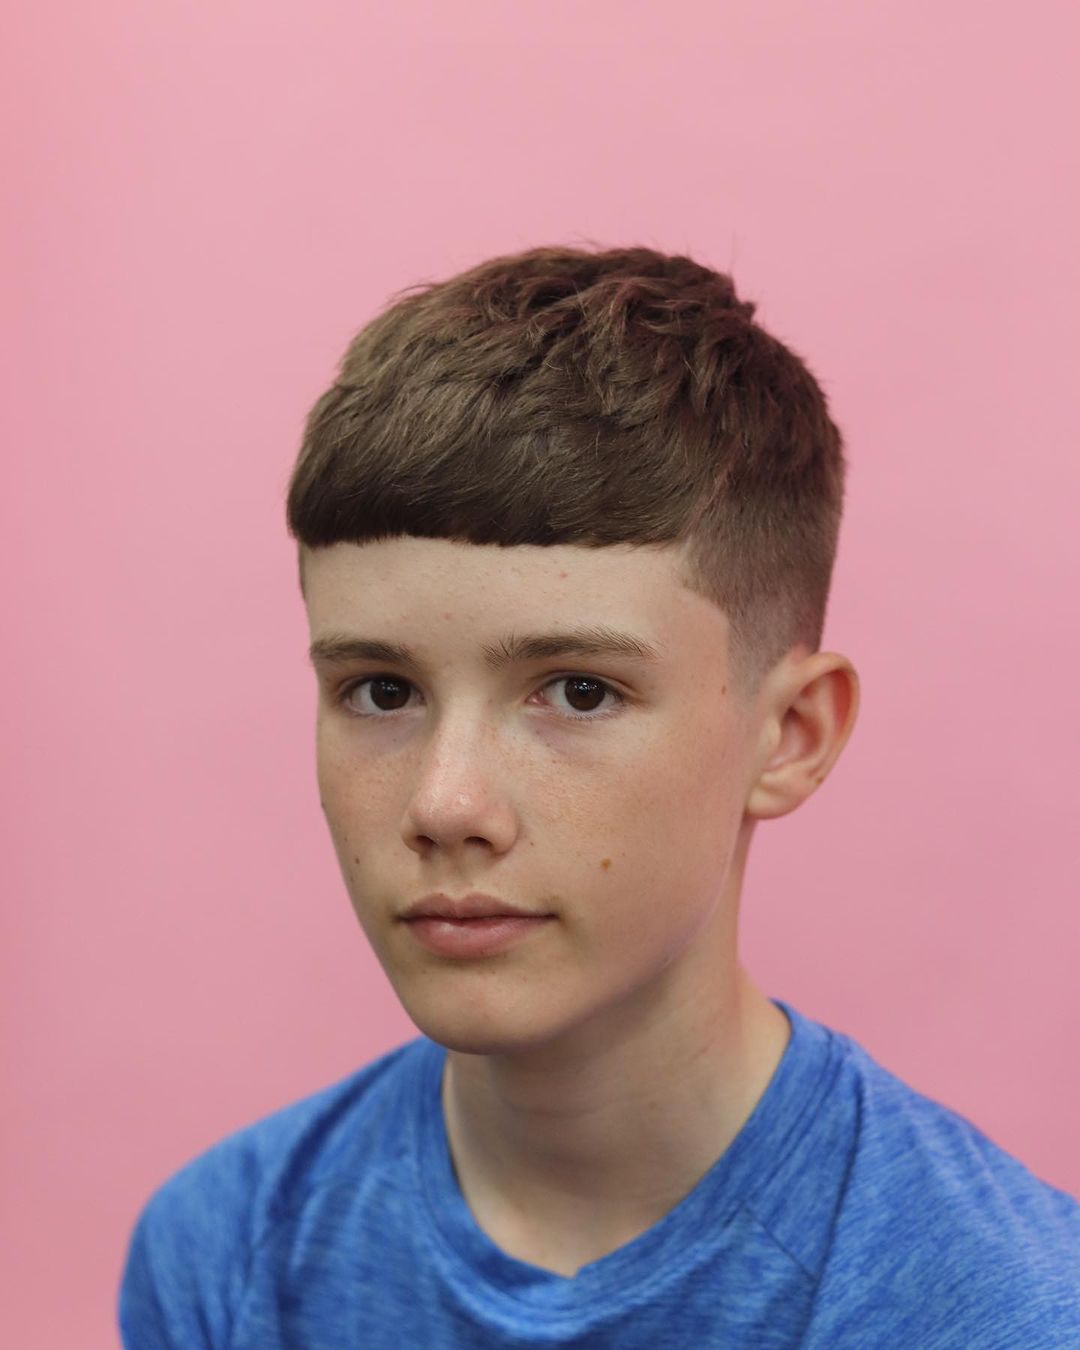 Back to school haircut for teen boys